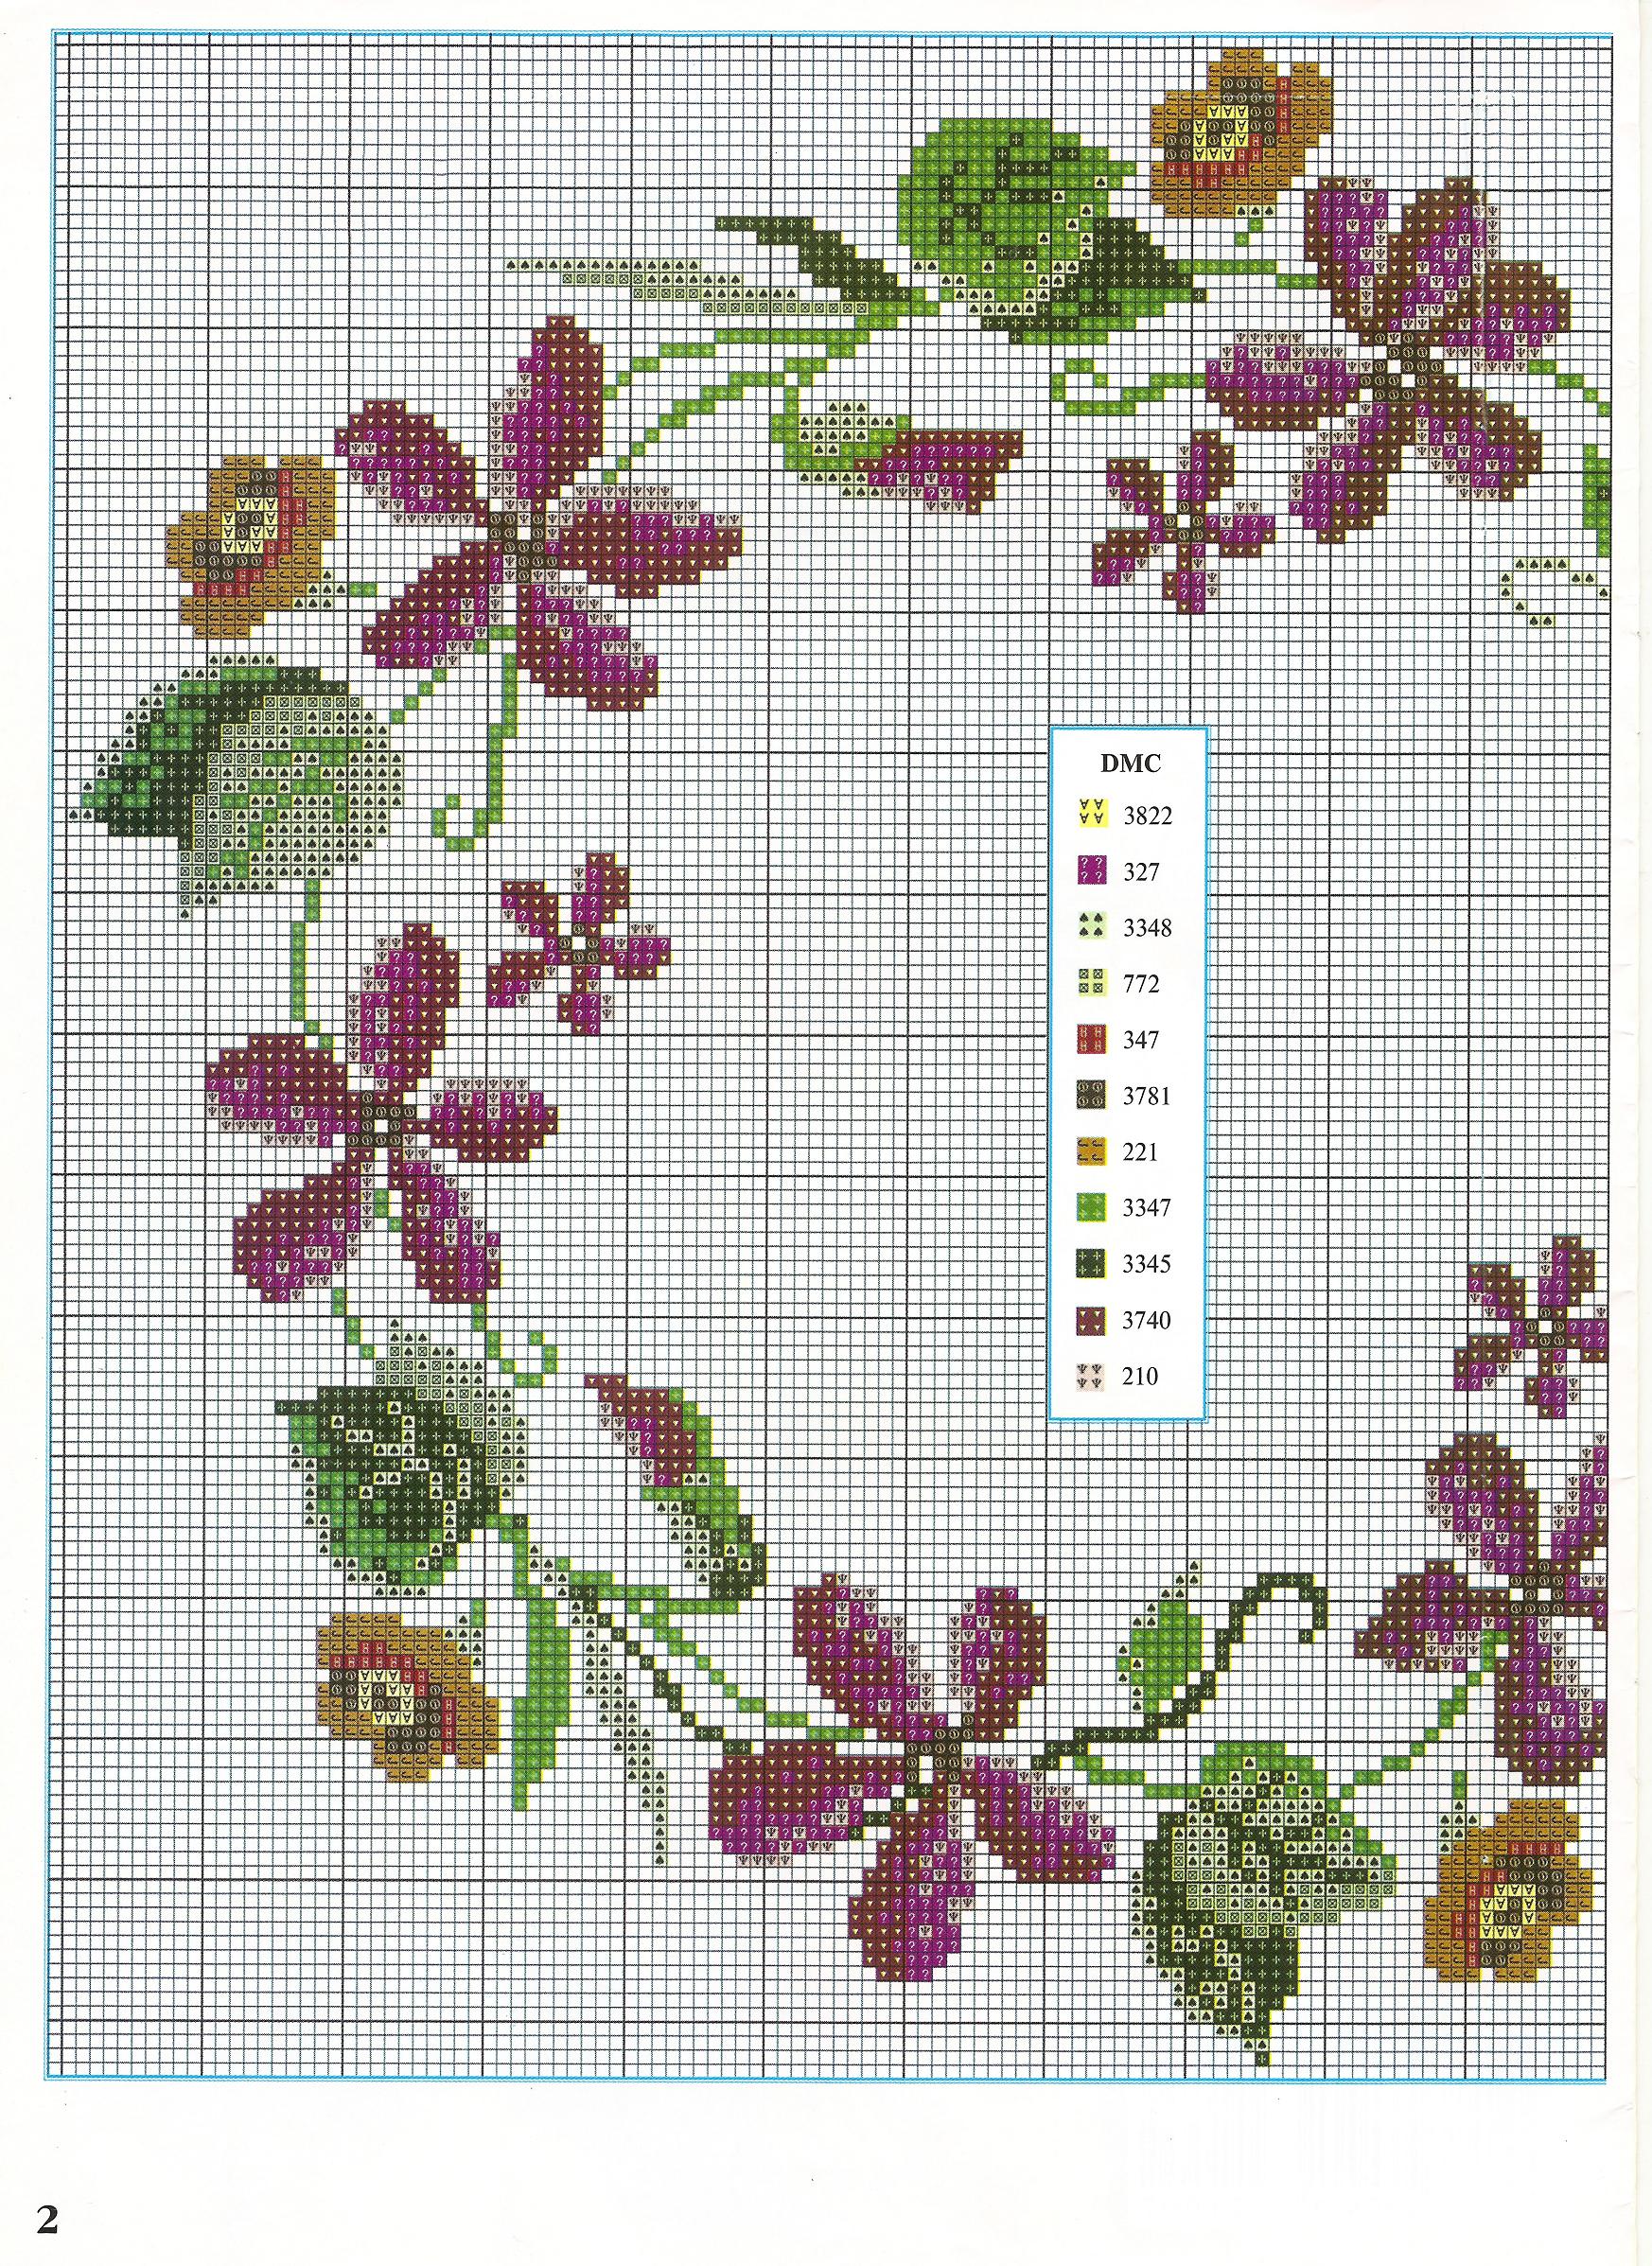 Garland of violets cross stitch pattern (1)